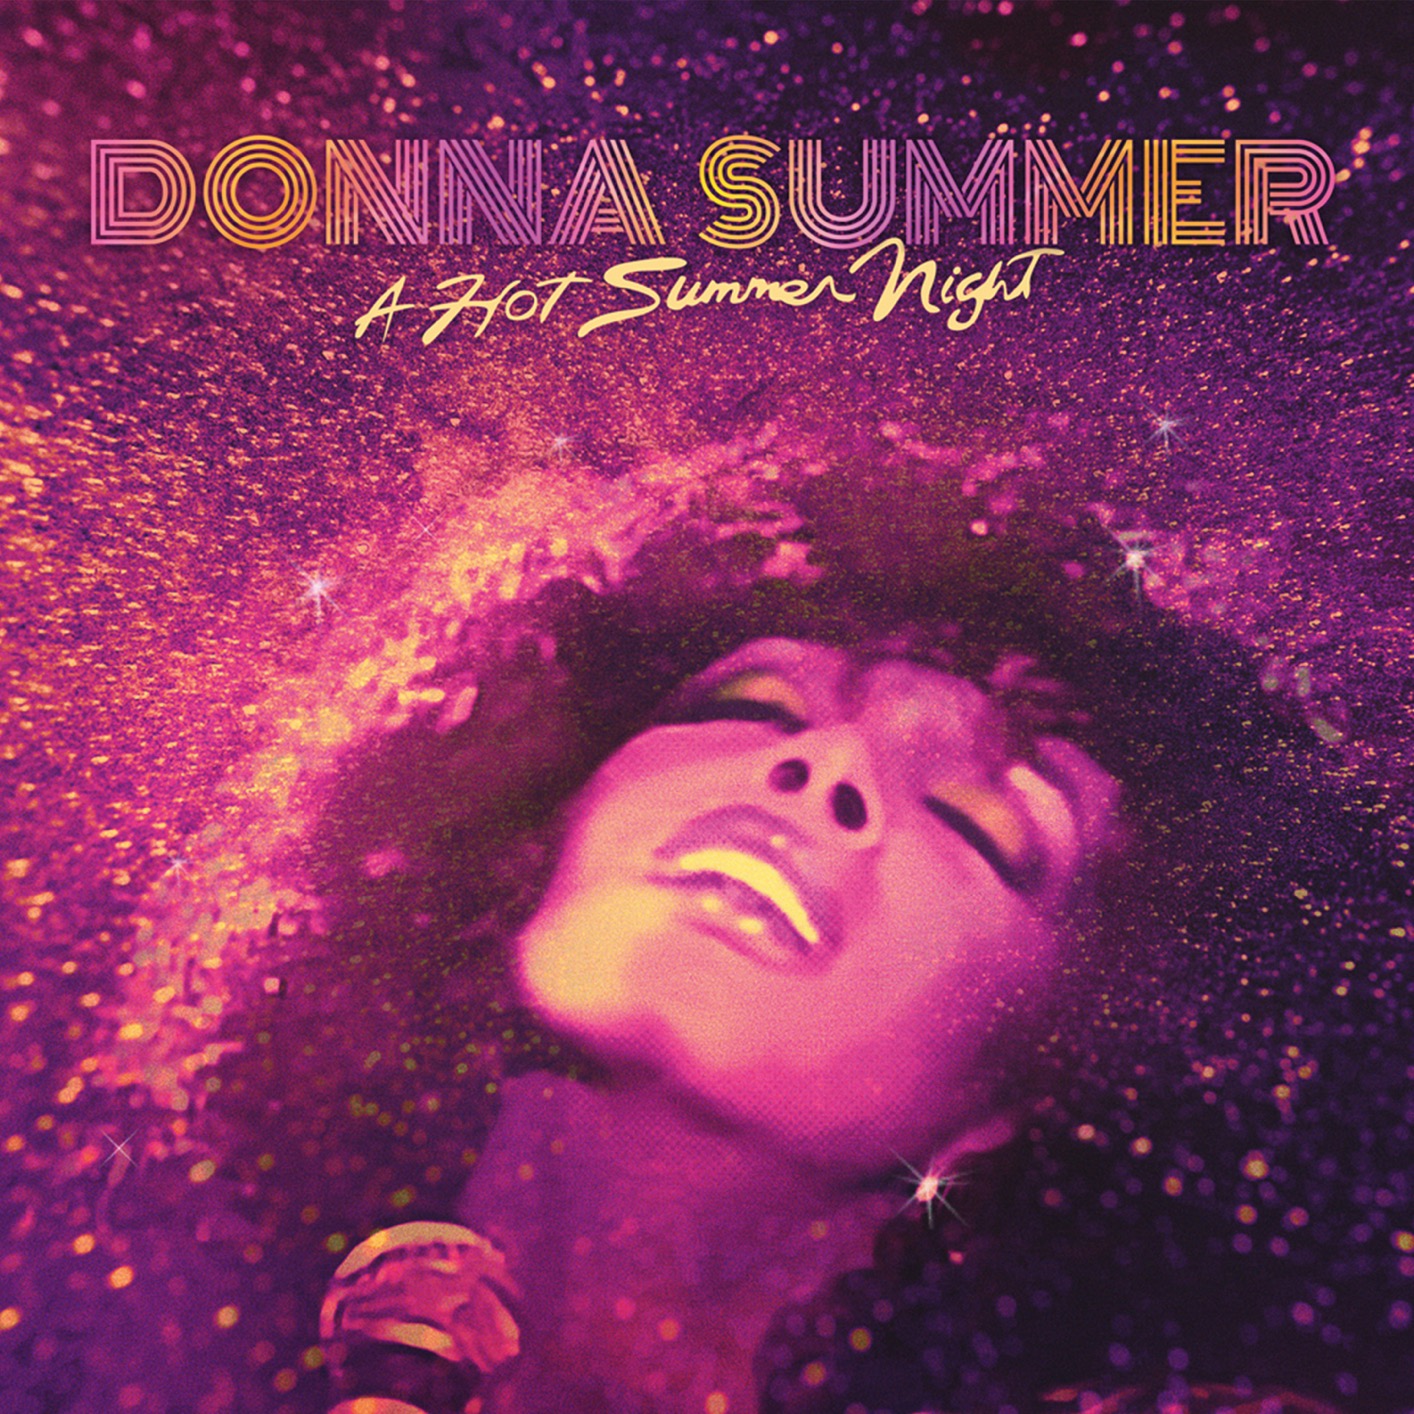 Donna Summer - A Hot Summer Night (Live at Pacific Amphitheatre 06.08.1983) (1983/2020) [FLAC 24bit/44,1kHz]